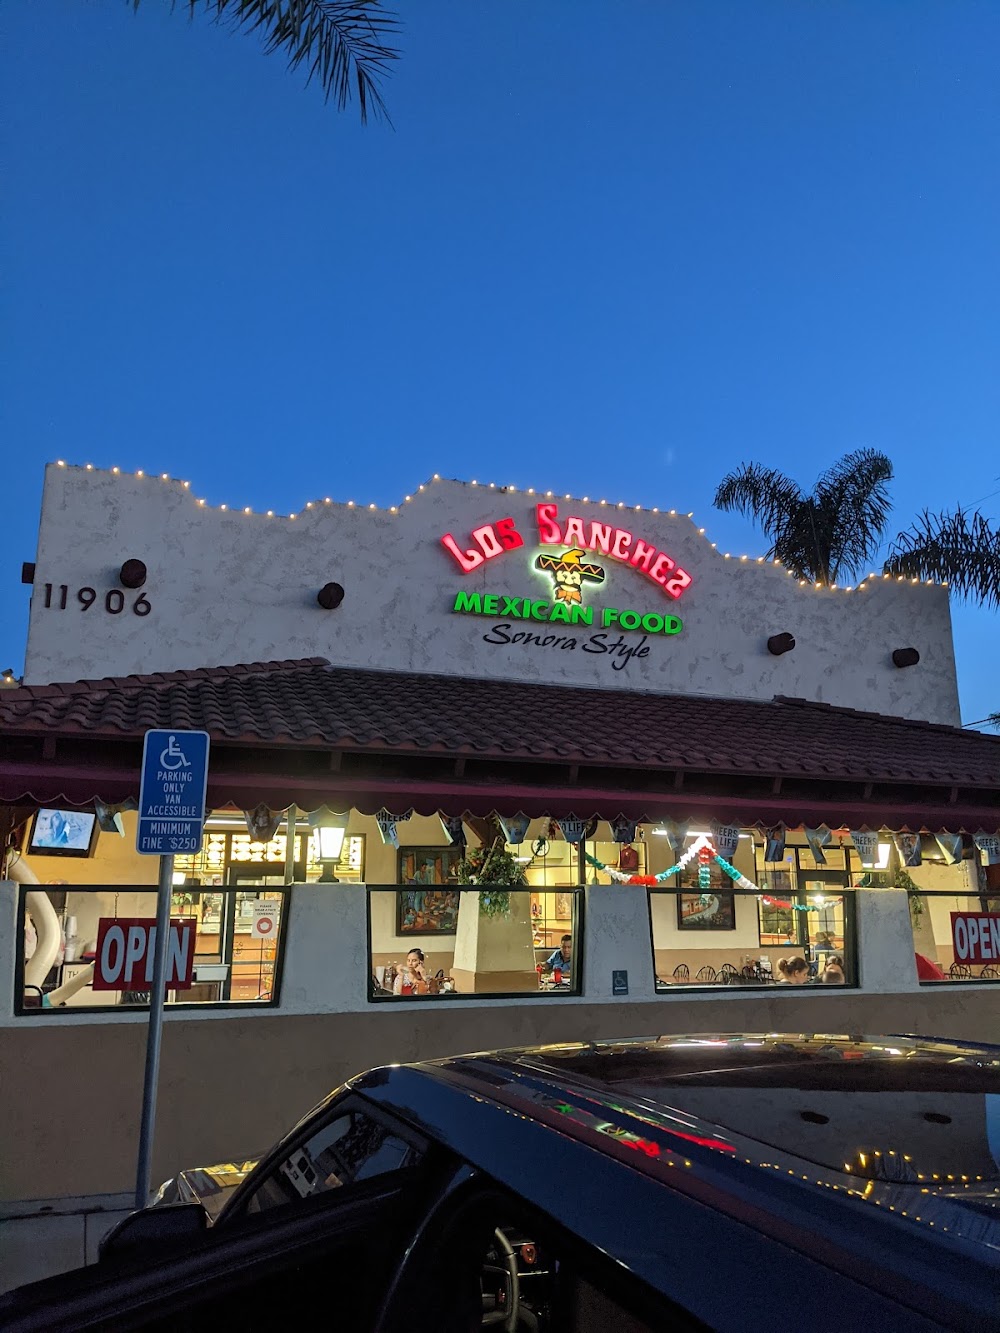 Los Sanchez Restaurant